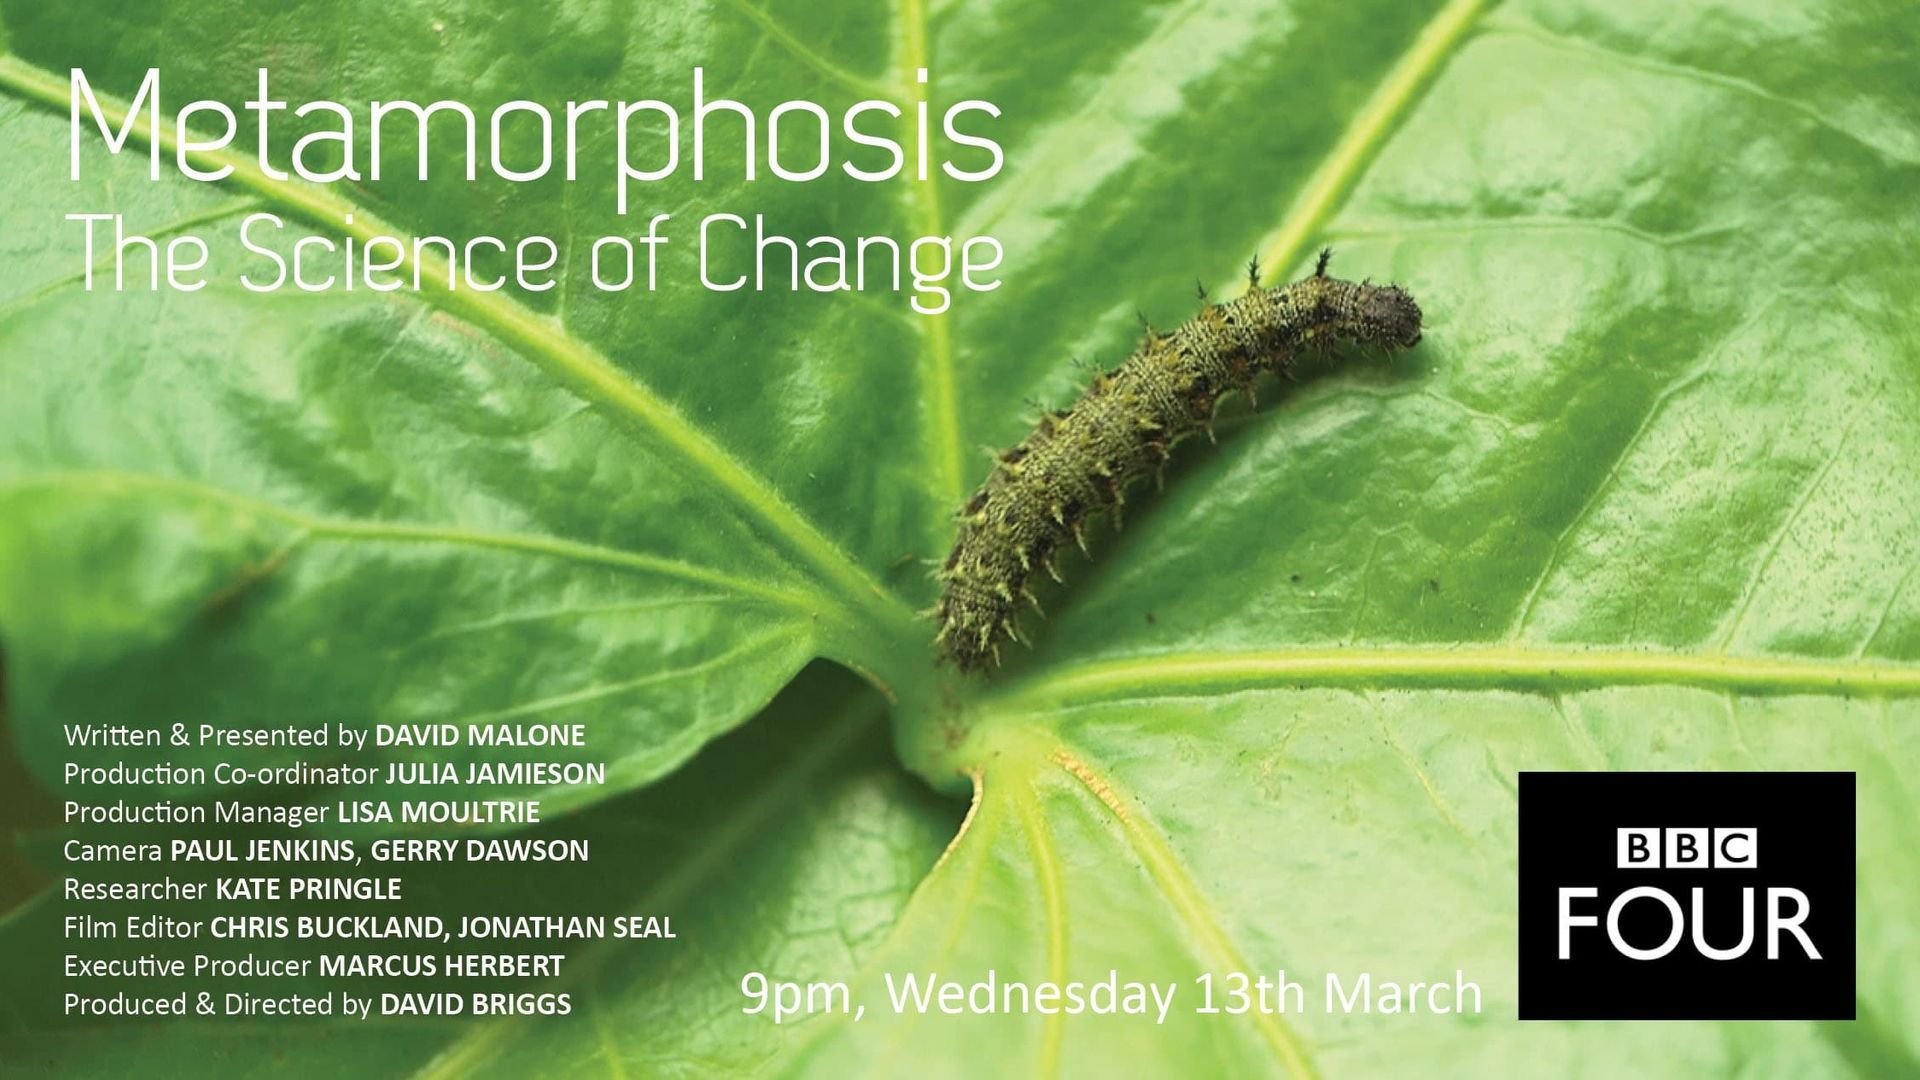 Metamorphosis: The Science of Change background